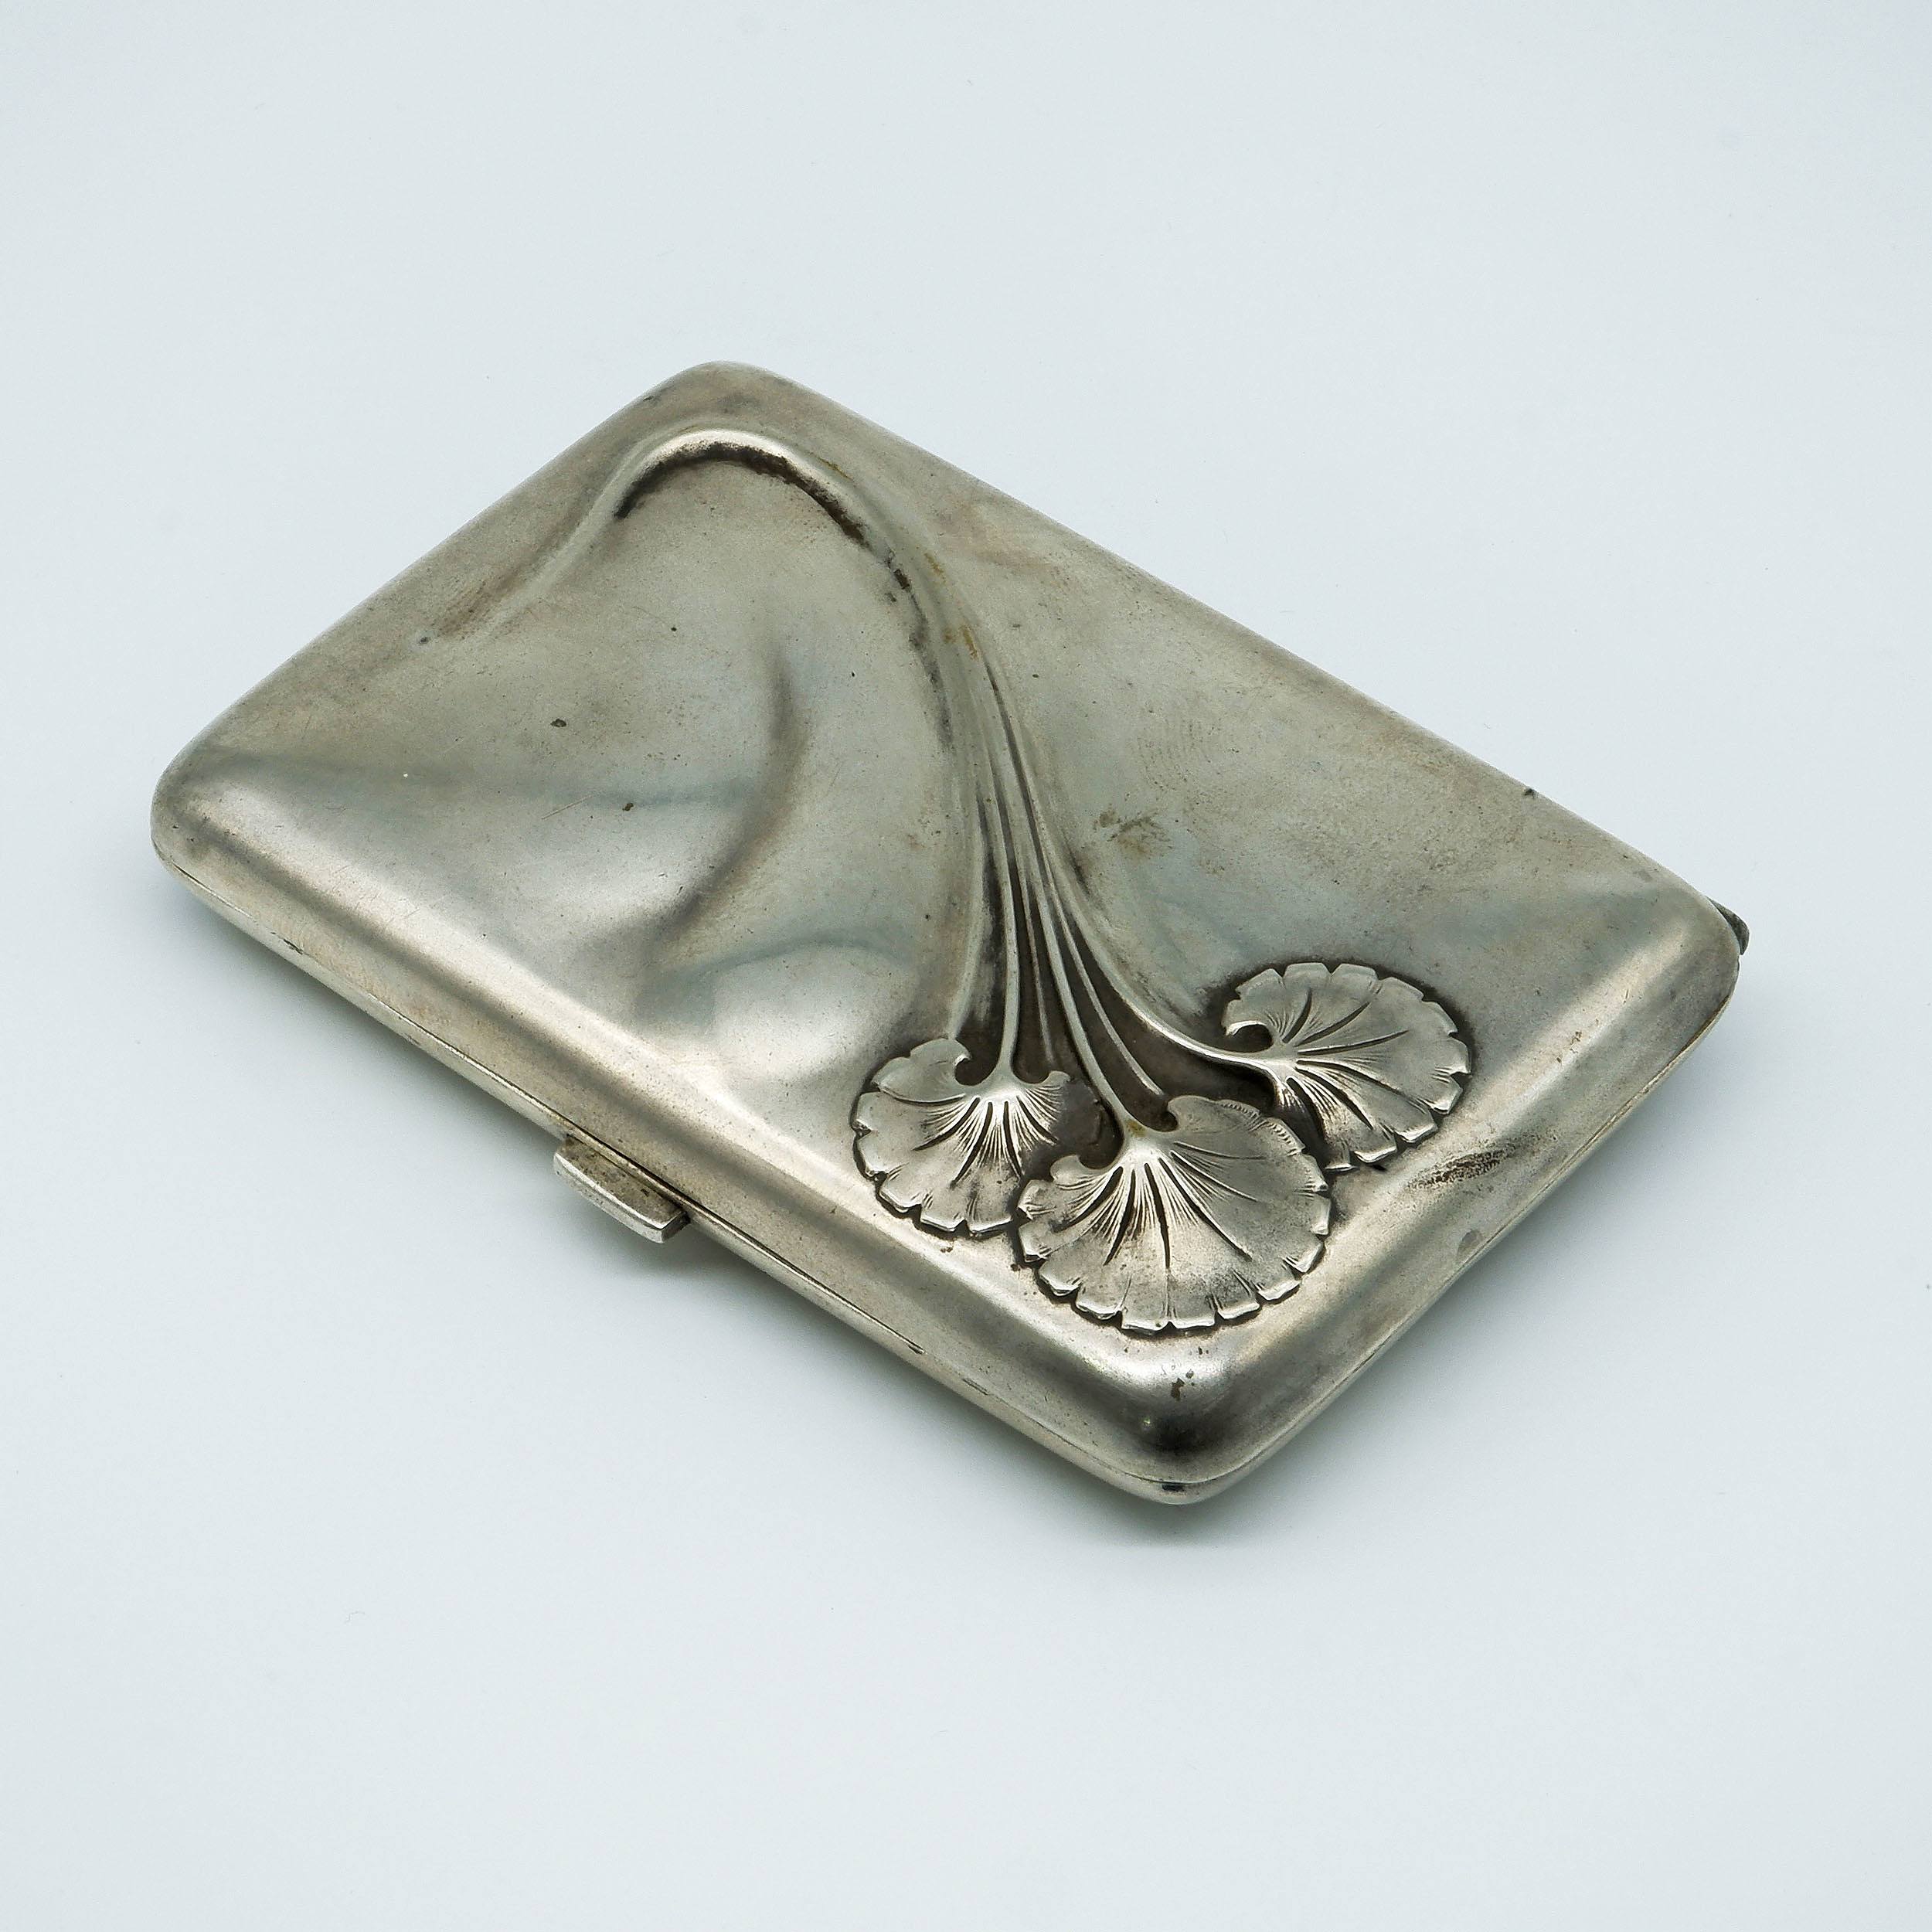 'Continental Art Nouveau 800 Silver Gilt Cigarette Case, Early 20th Century'